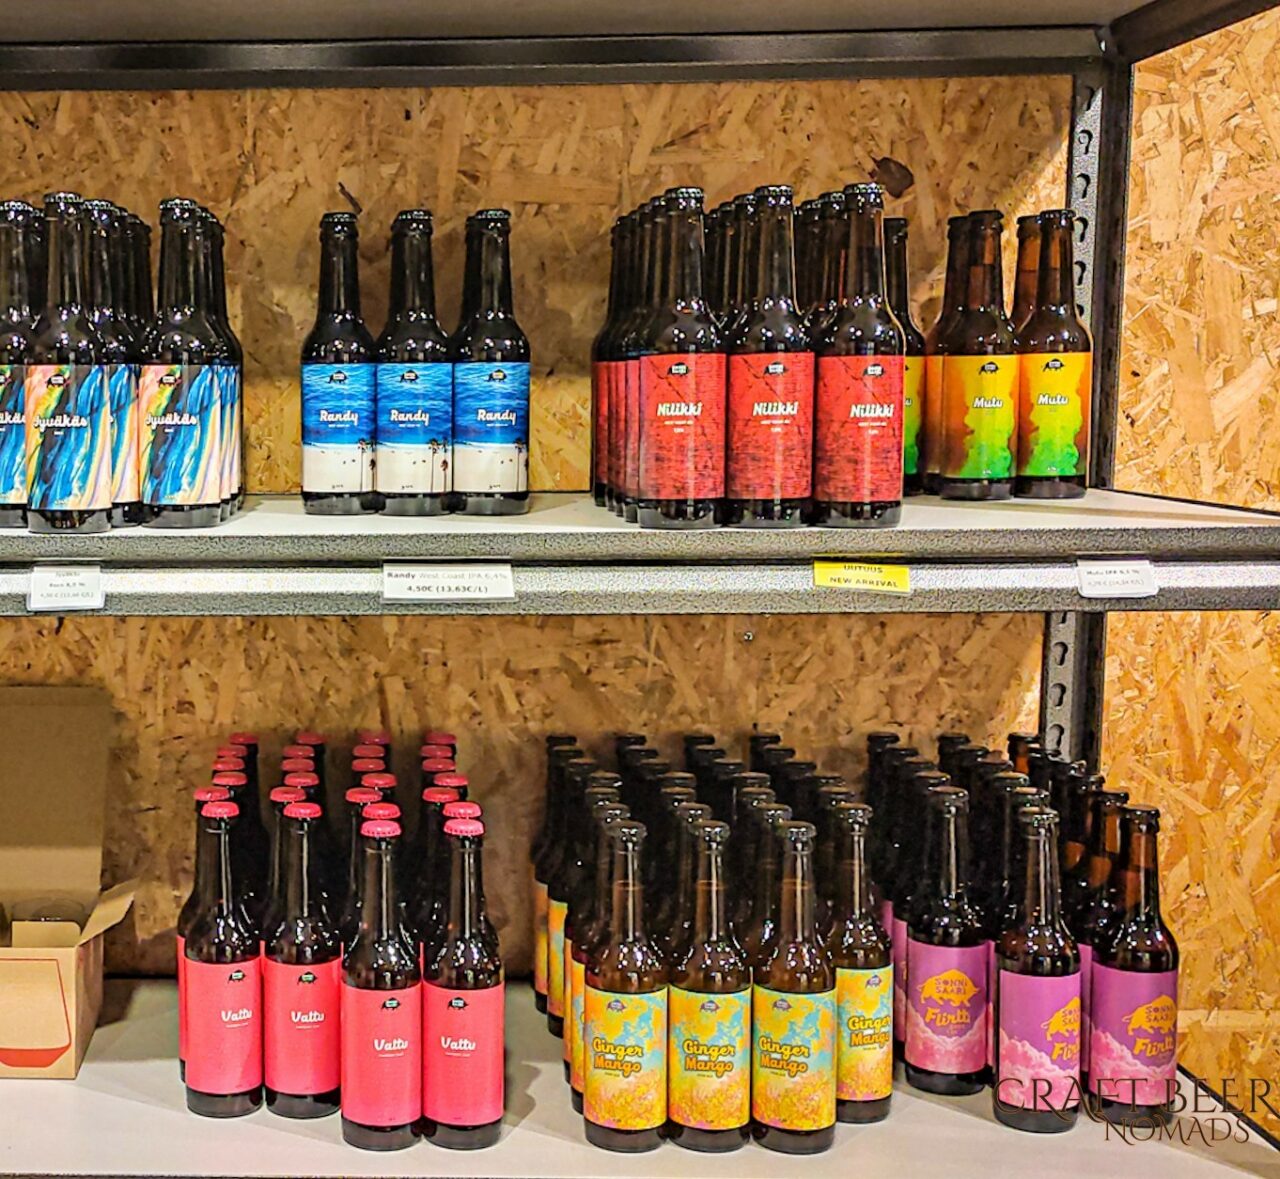 Sonnisaari | Microbreweries in Oulu, Finland | Craft Beer Nomads blog